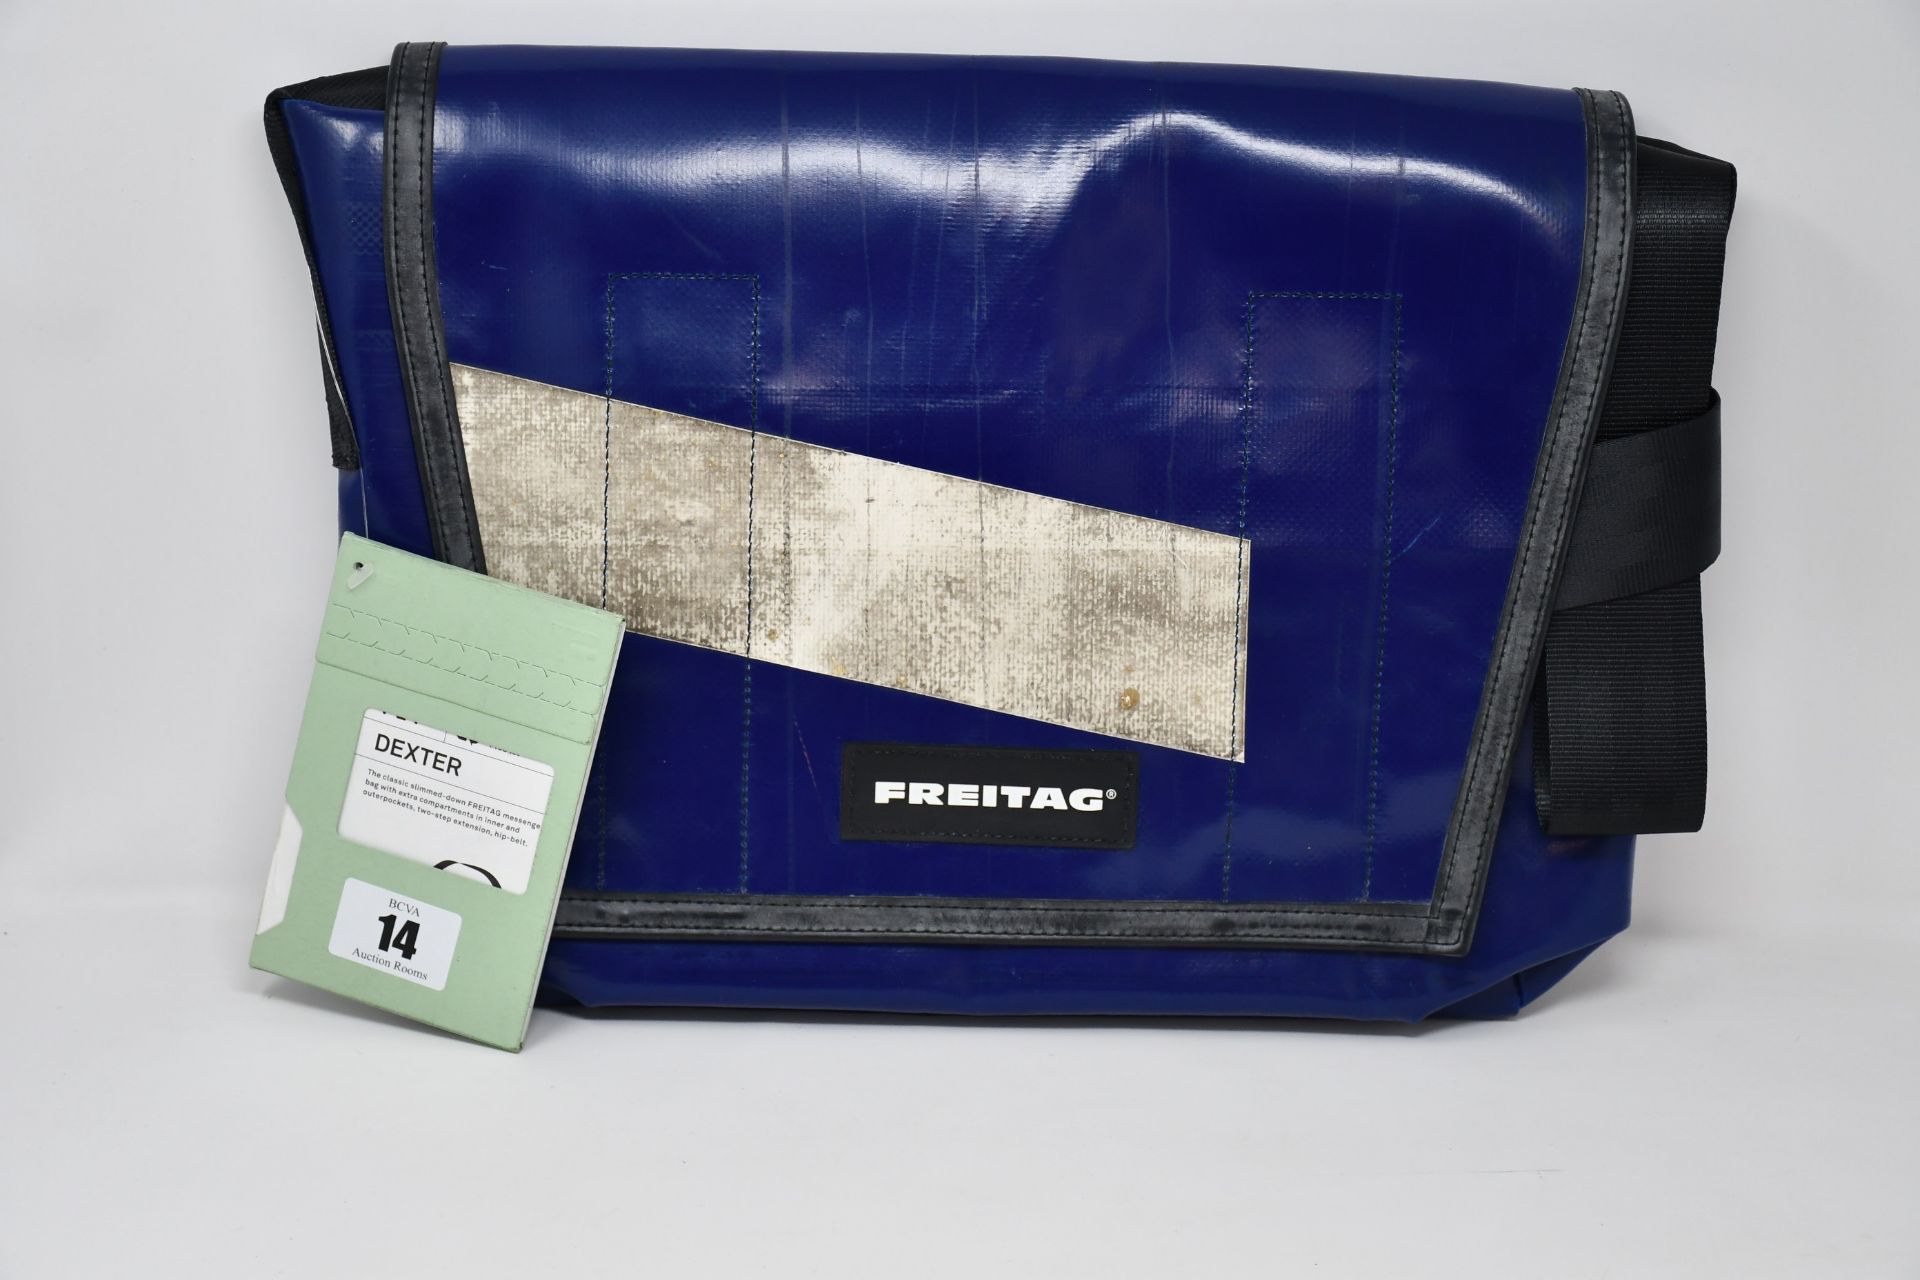 An as new Freitag Dexter F14 blue bag.